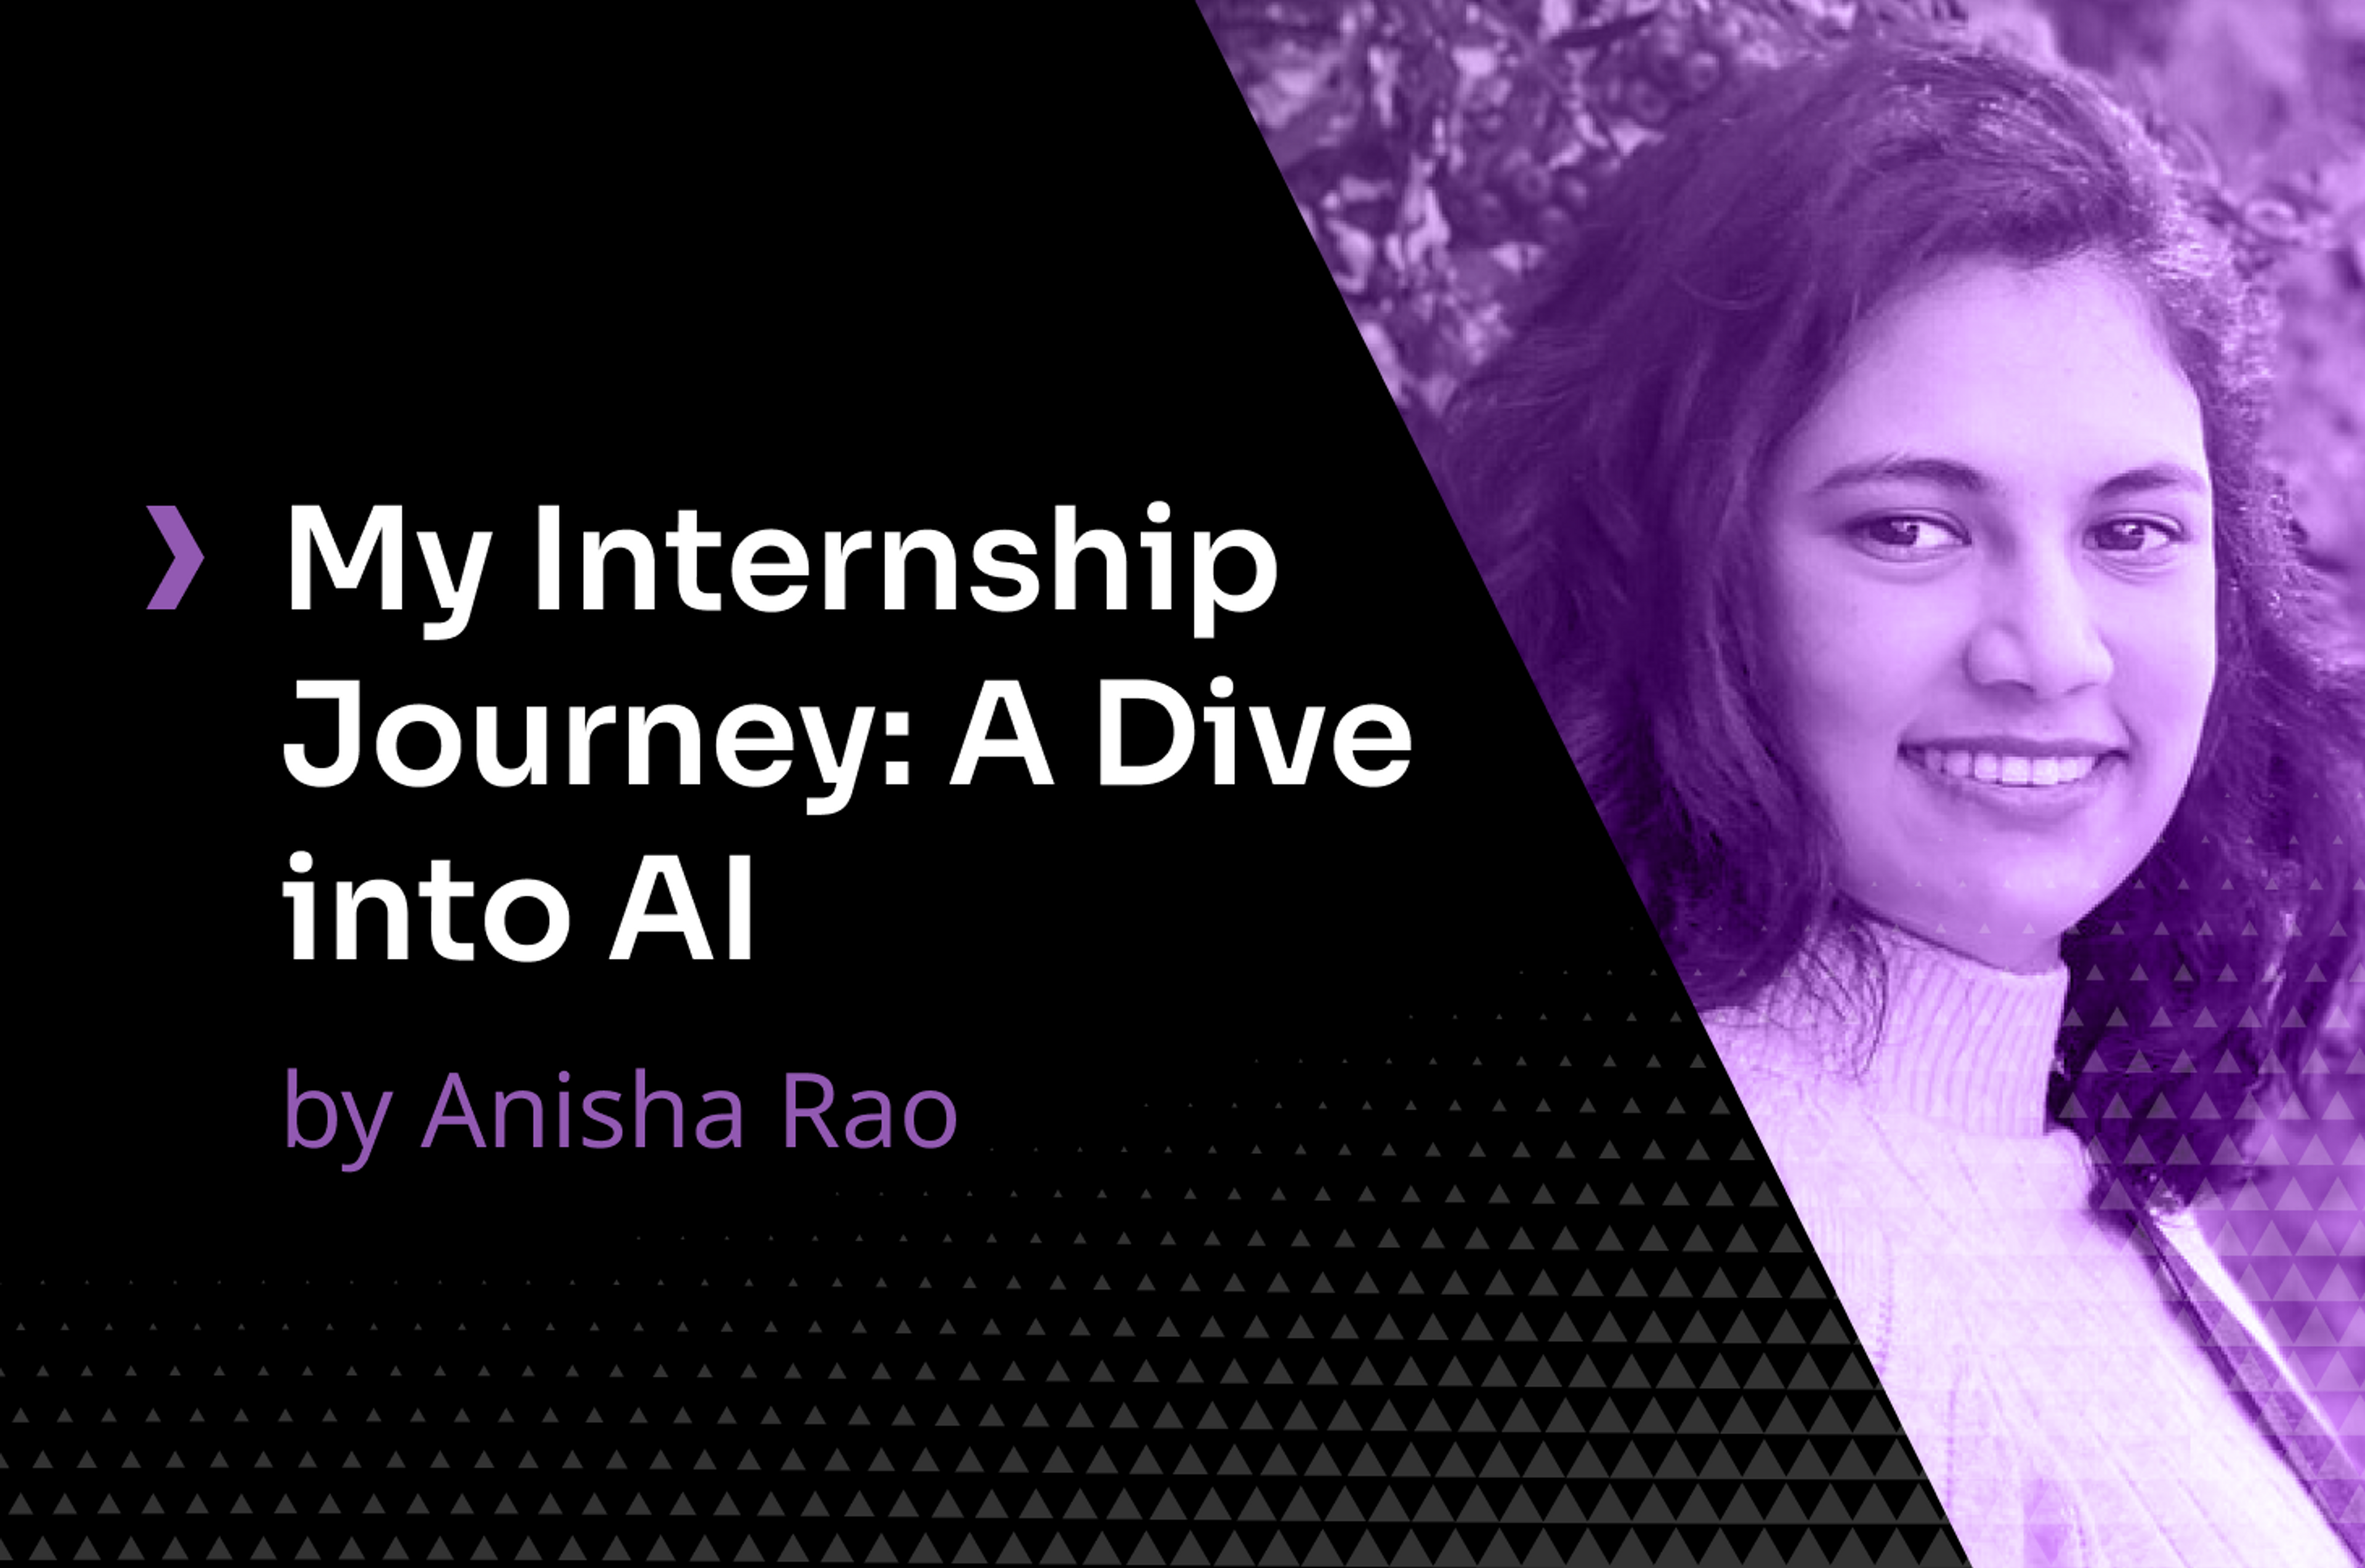 My Internship Journey: A Dive into AI